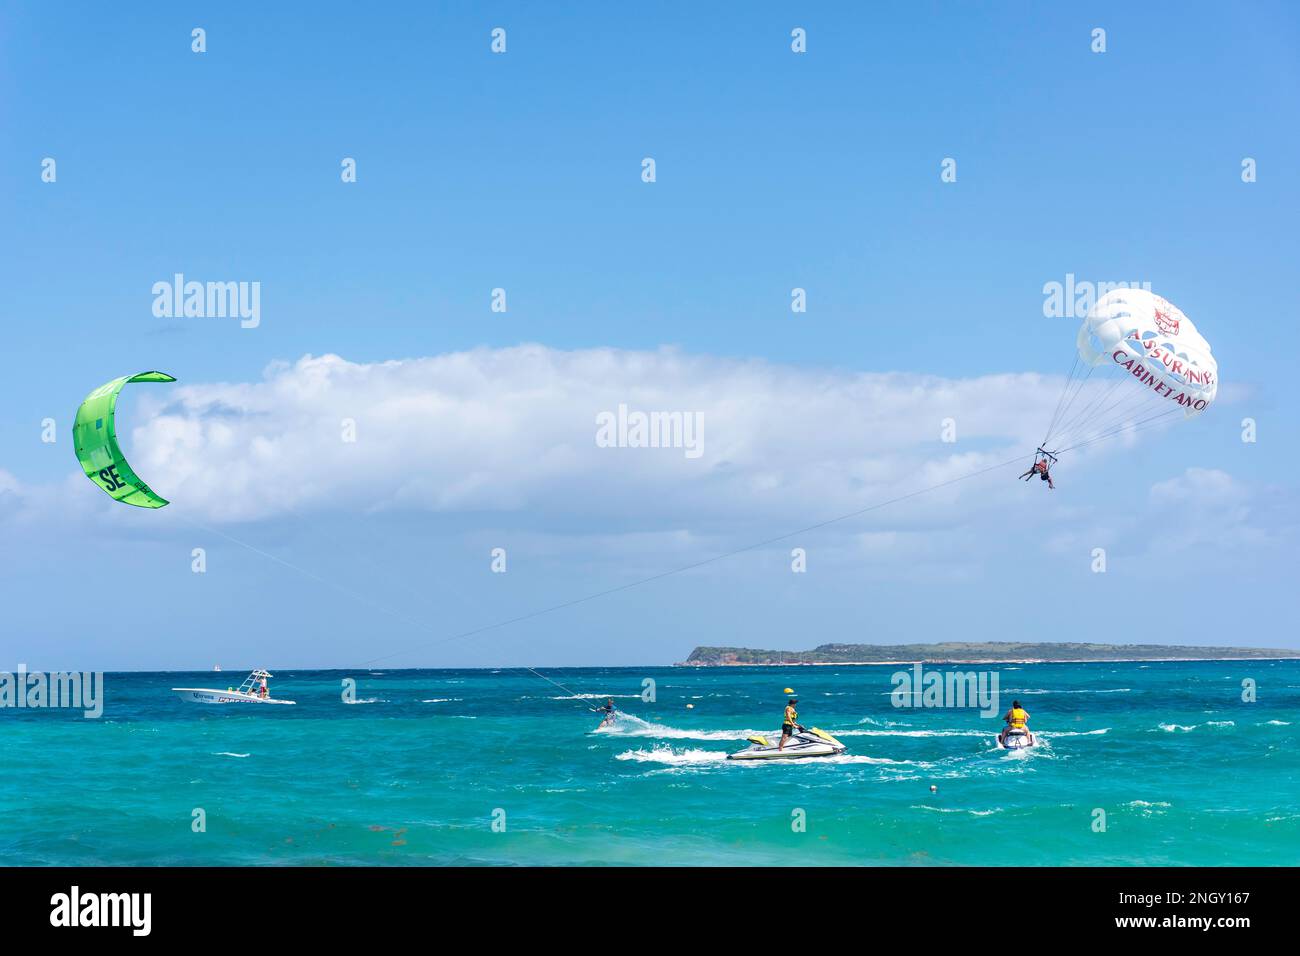 Man kite surfing and couple paragliding, Orient Bay (Baie Orientale), St Martin (Saint-Martin), Lesser Antilles, Caribbean Stock Photo